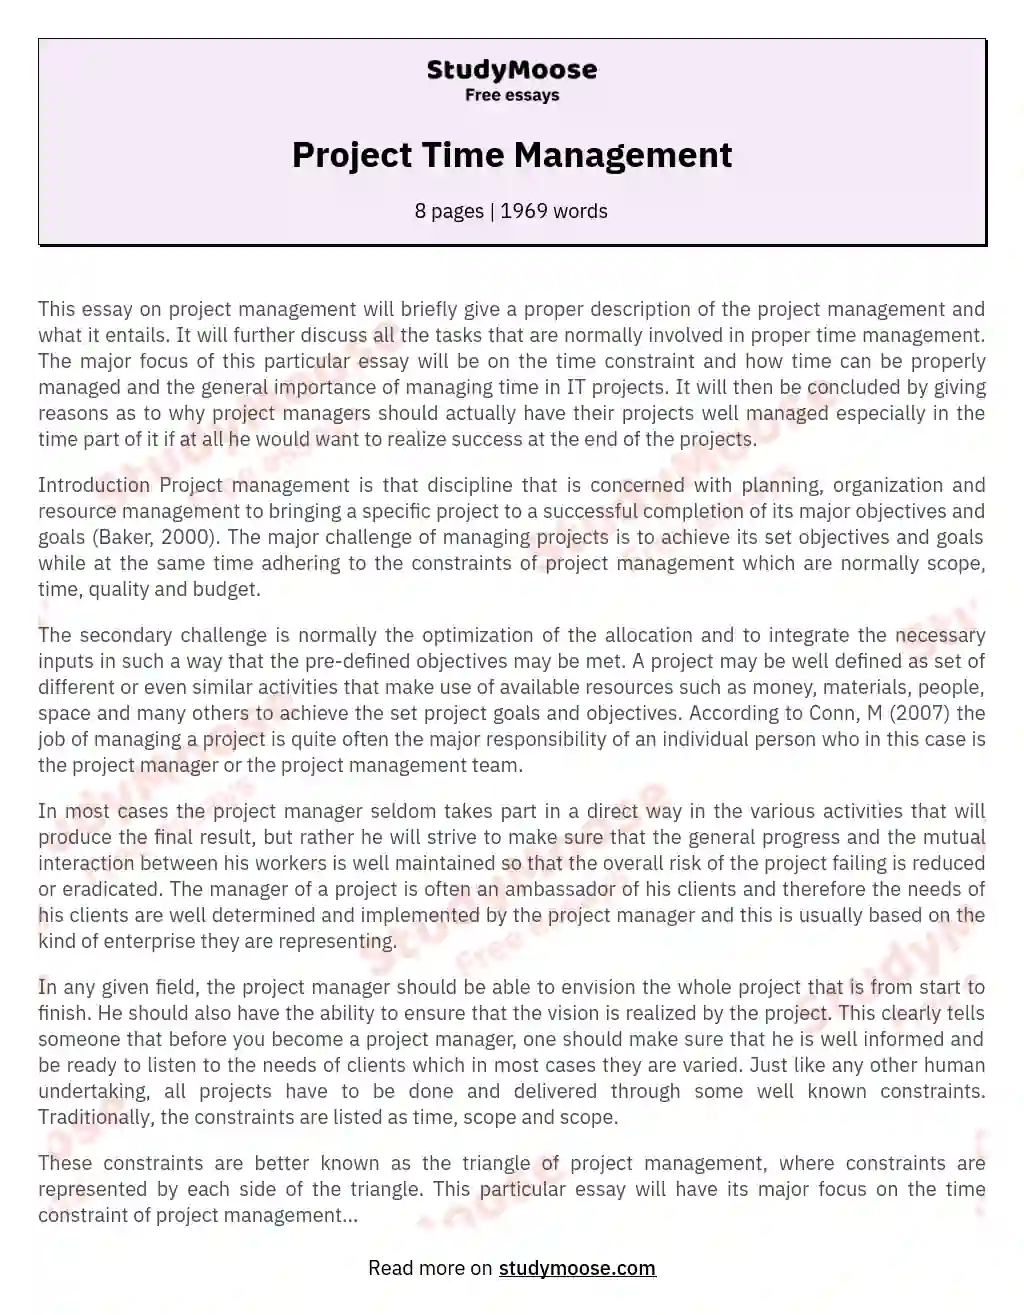 Project Time Management essay